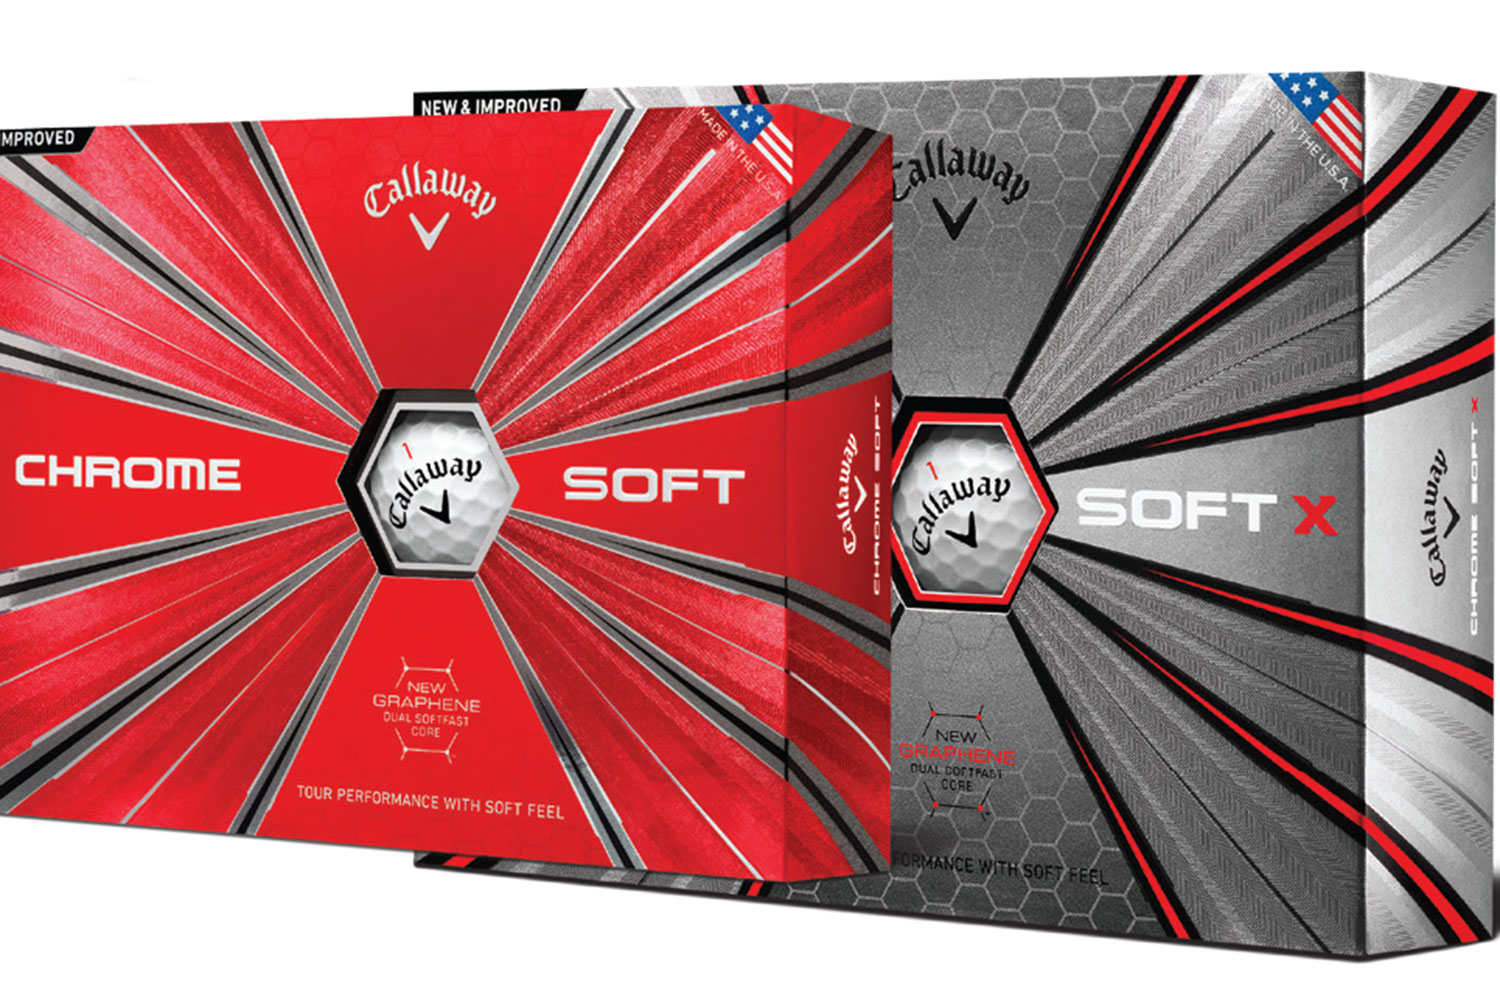 Golf Gear - Callaway Chrome Soft